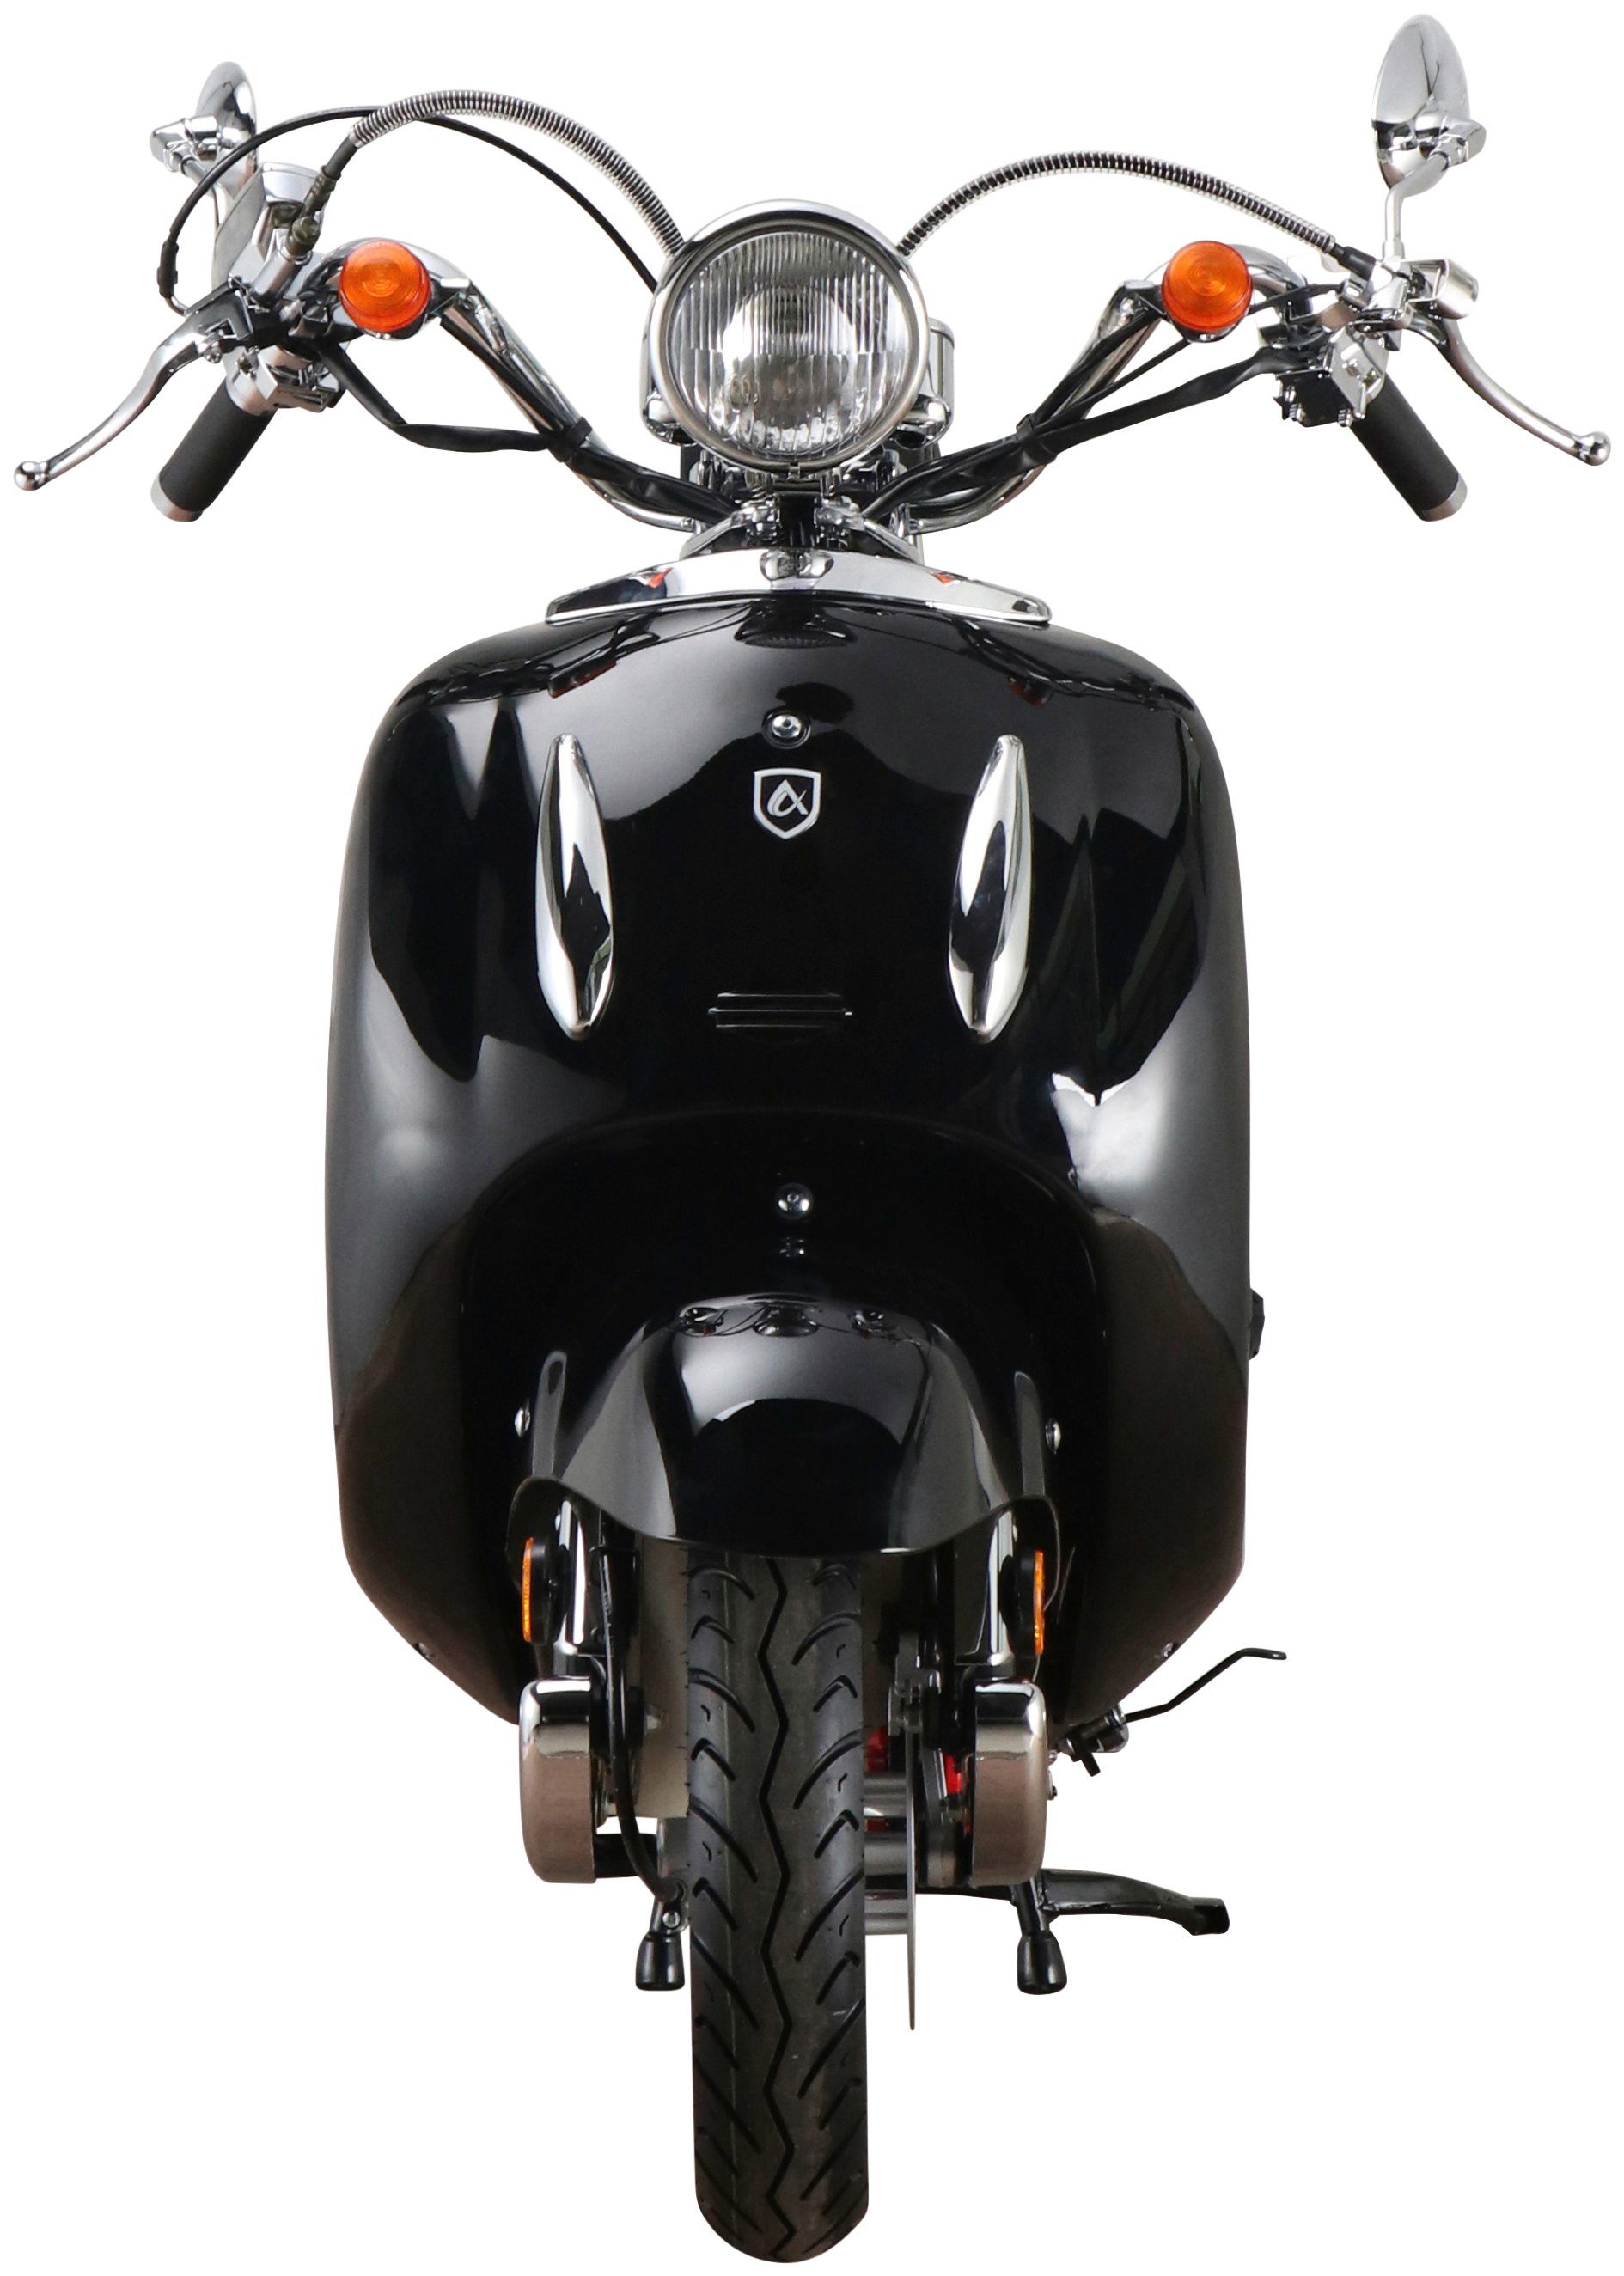 Motorroller schwarz Retro 5, ccm, 85 Euro km/h, Alpha Motors 125 Firenze,